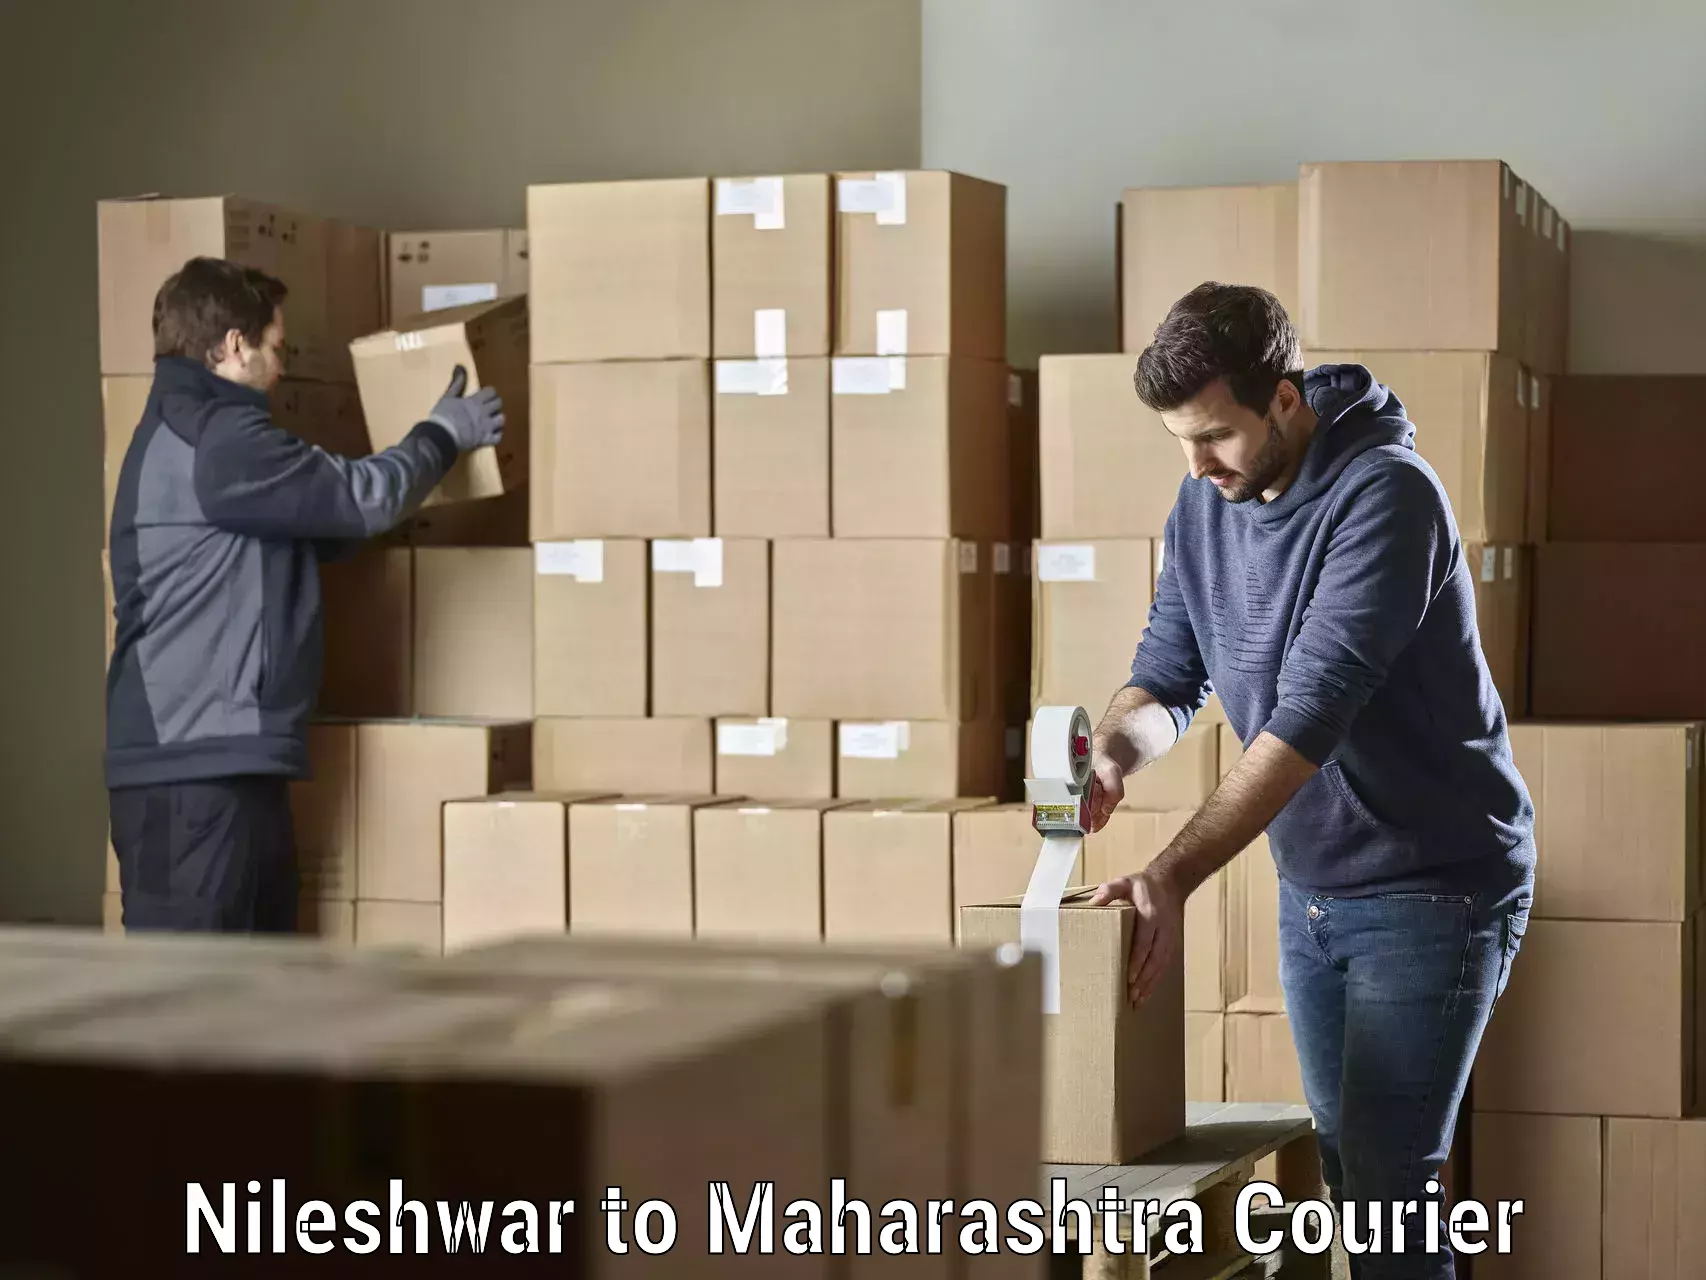 High-speed parcel service Nileshwar to Chandrapur